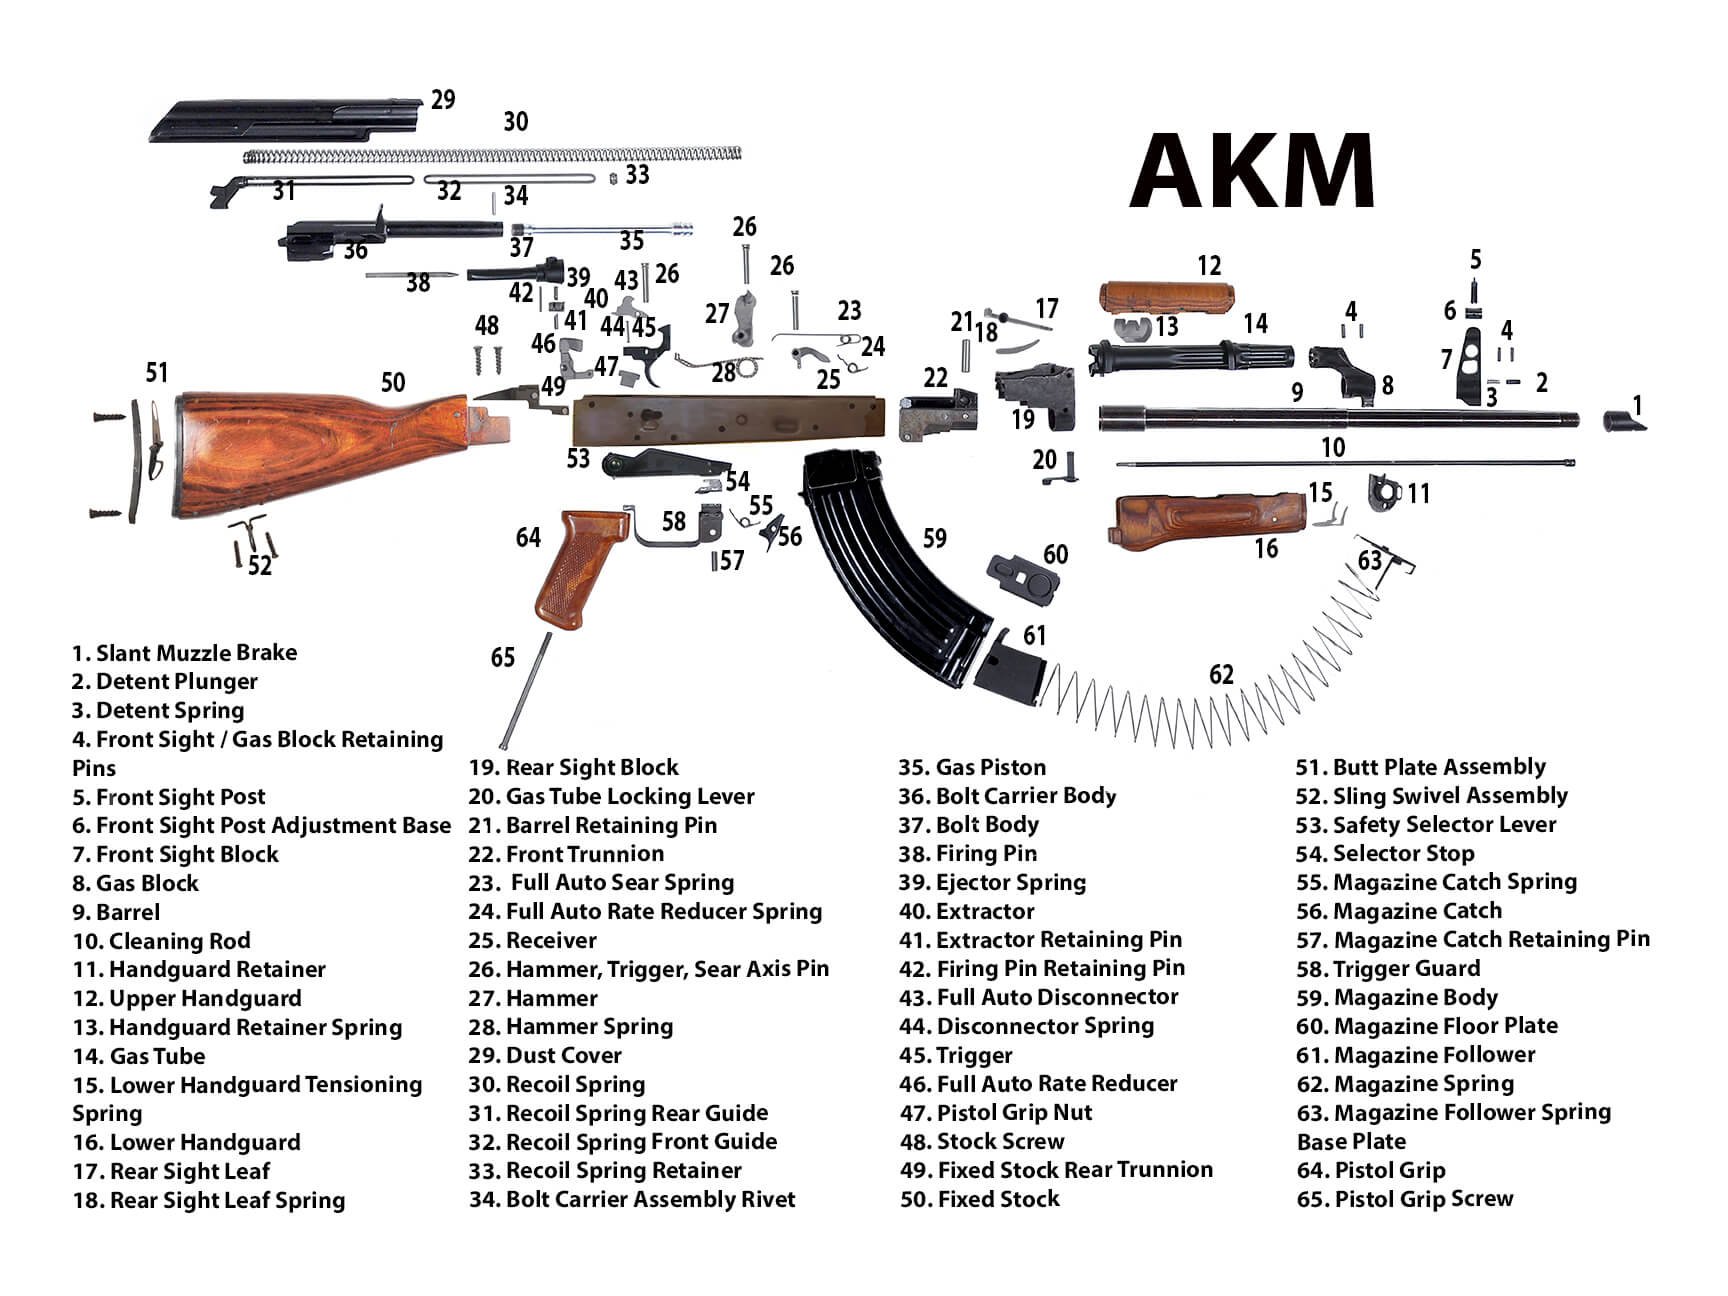 gun, Weapon, Guns, Weapons, Rifle, Military, Machine, Assault, Police, Swat Wallpaper